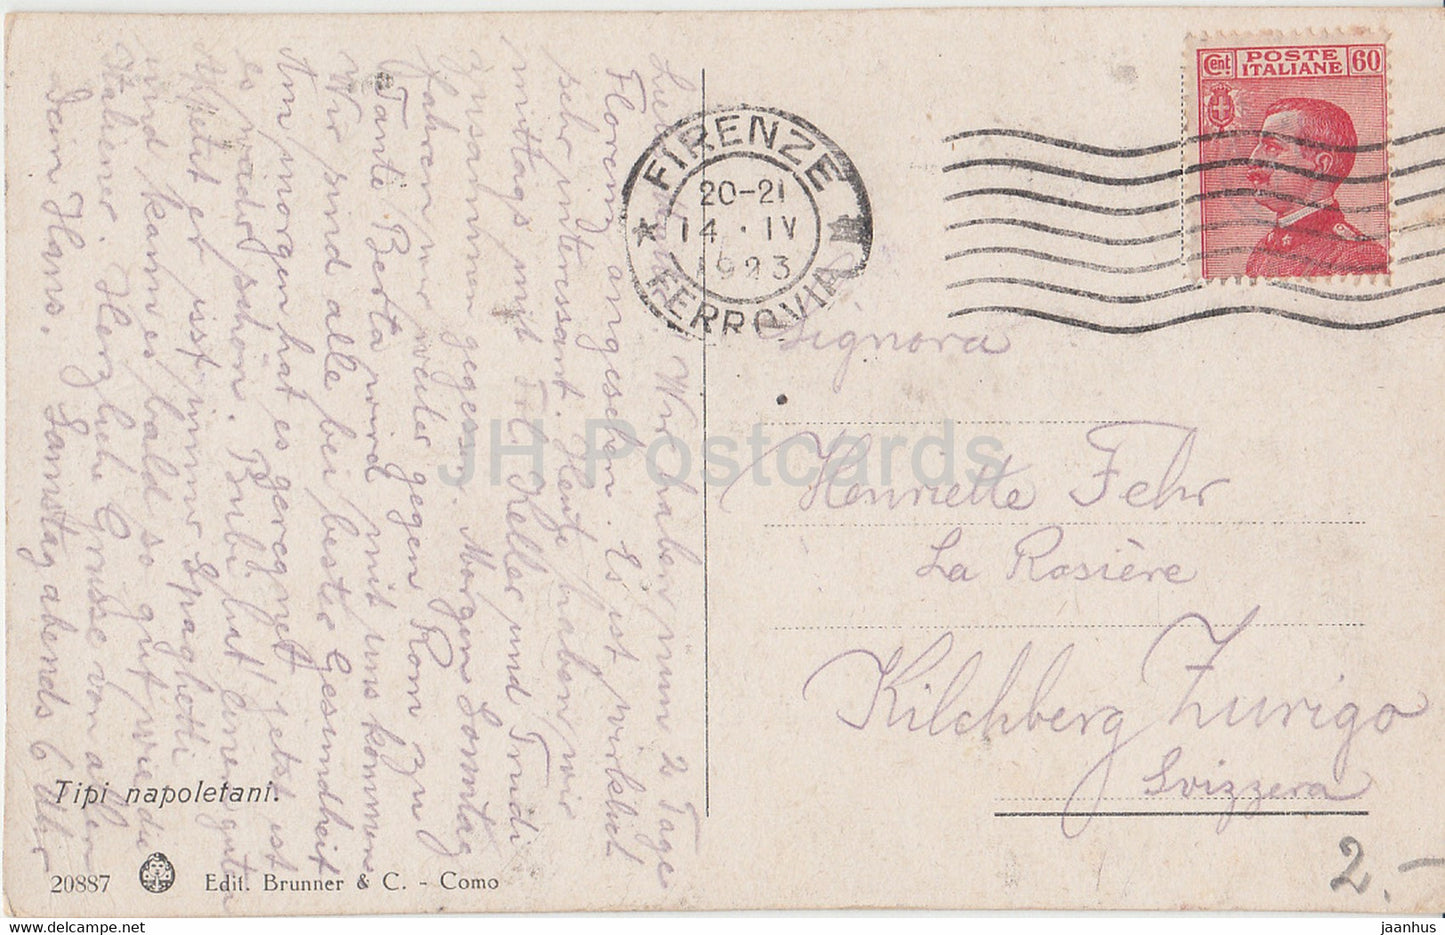 Tipi Napoletani - pâtes - spaghetti - garçons - enfants - Brunner &amp; C - 20887 - carte postale ancienne - 1923 - Italie - utilisé